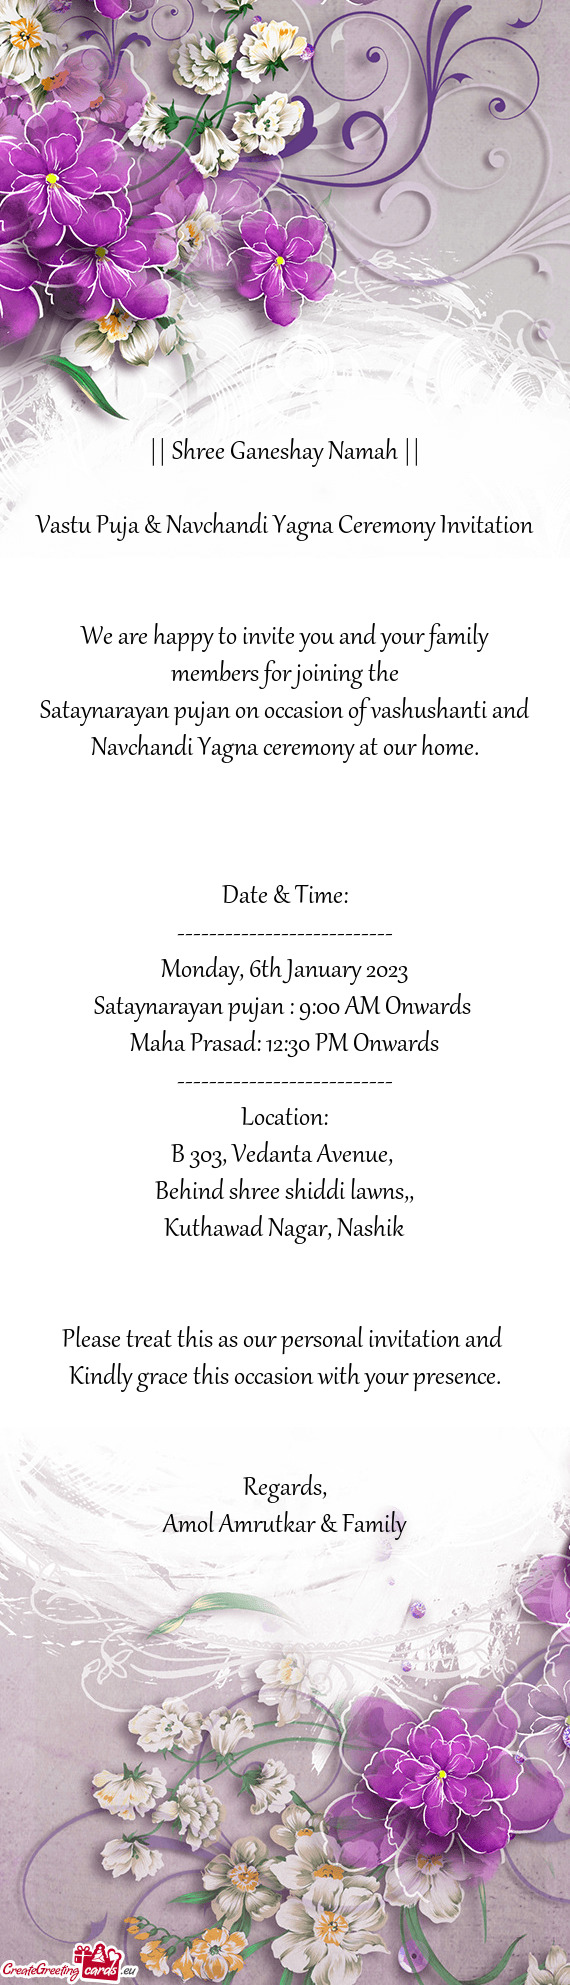 Sataynarayan pujan on occasion of vashushanti and Navchandi Yagna ceremony at our home